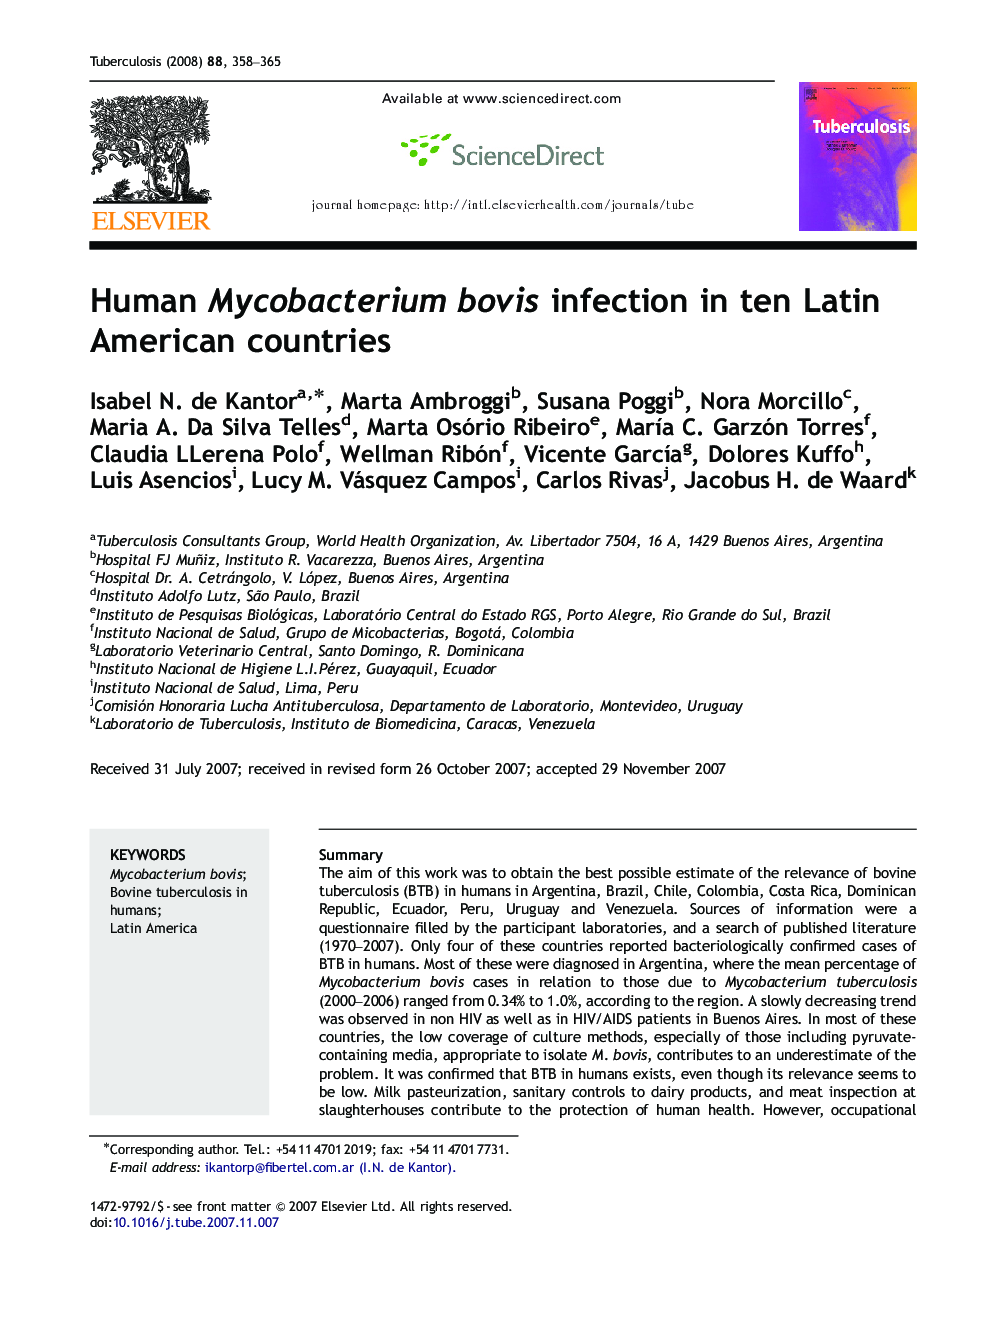 Human Mycobacterium bovis infection in ten Latin American countries